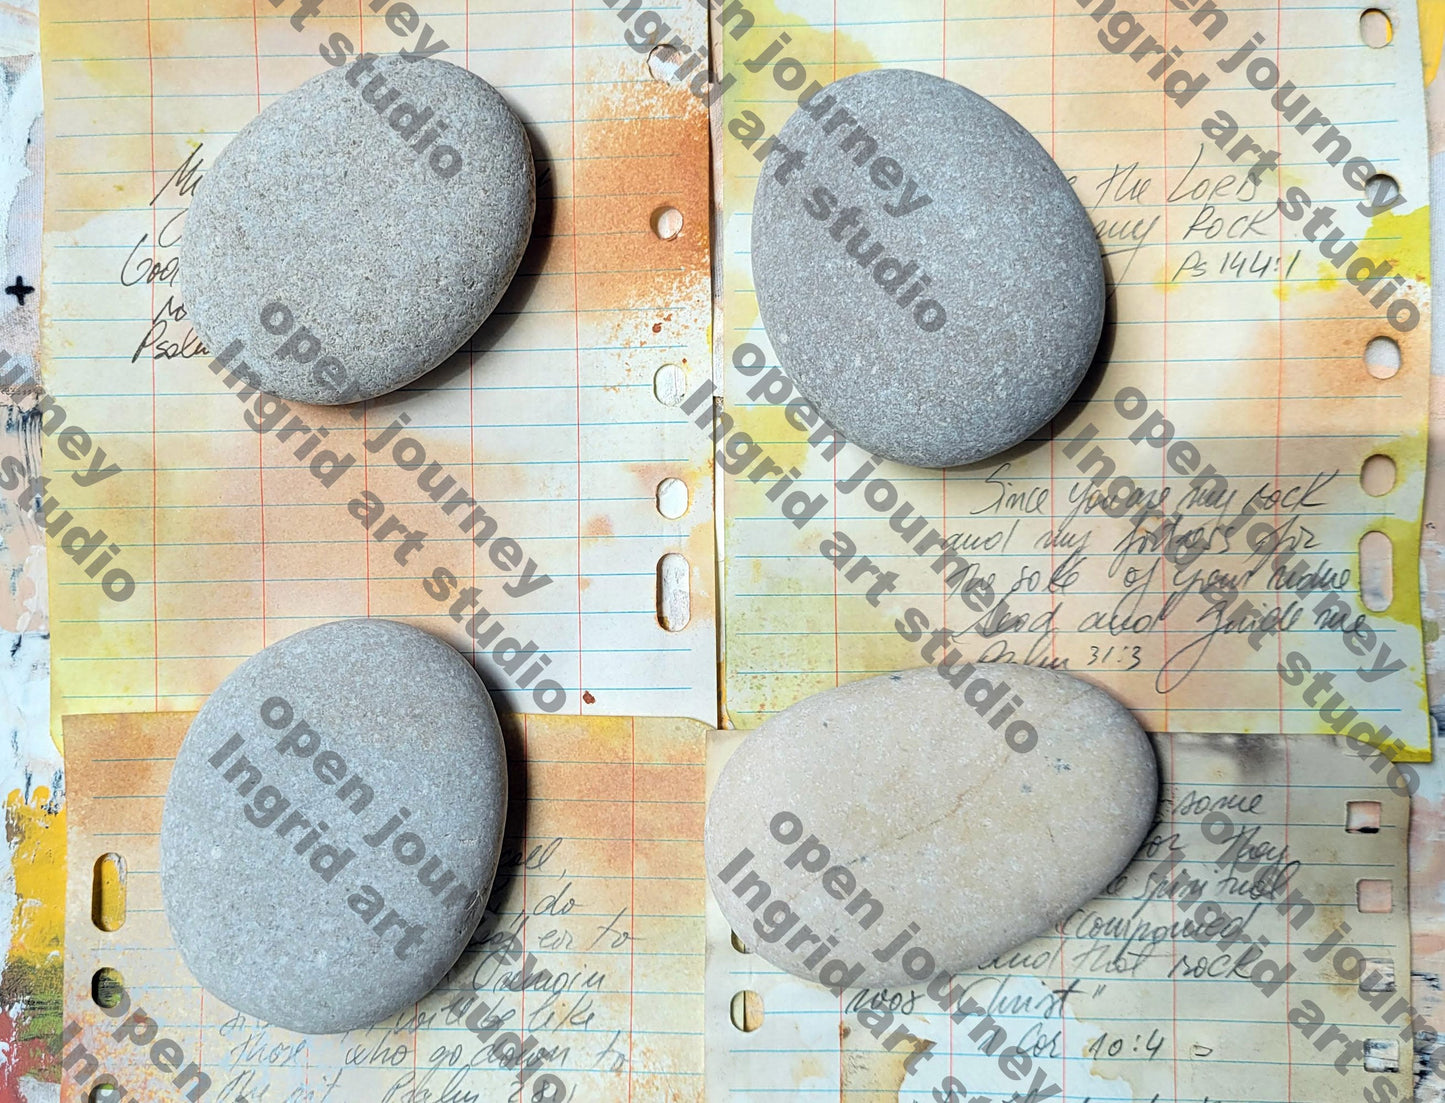 Living Stones ADD ON- Bible journaling supplies - digital download